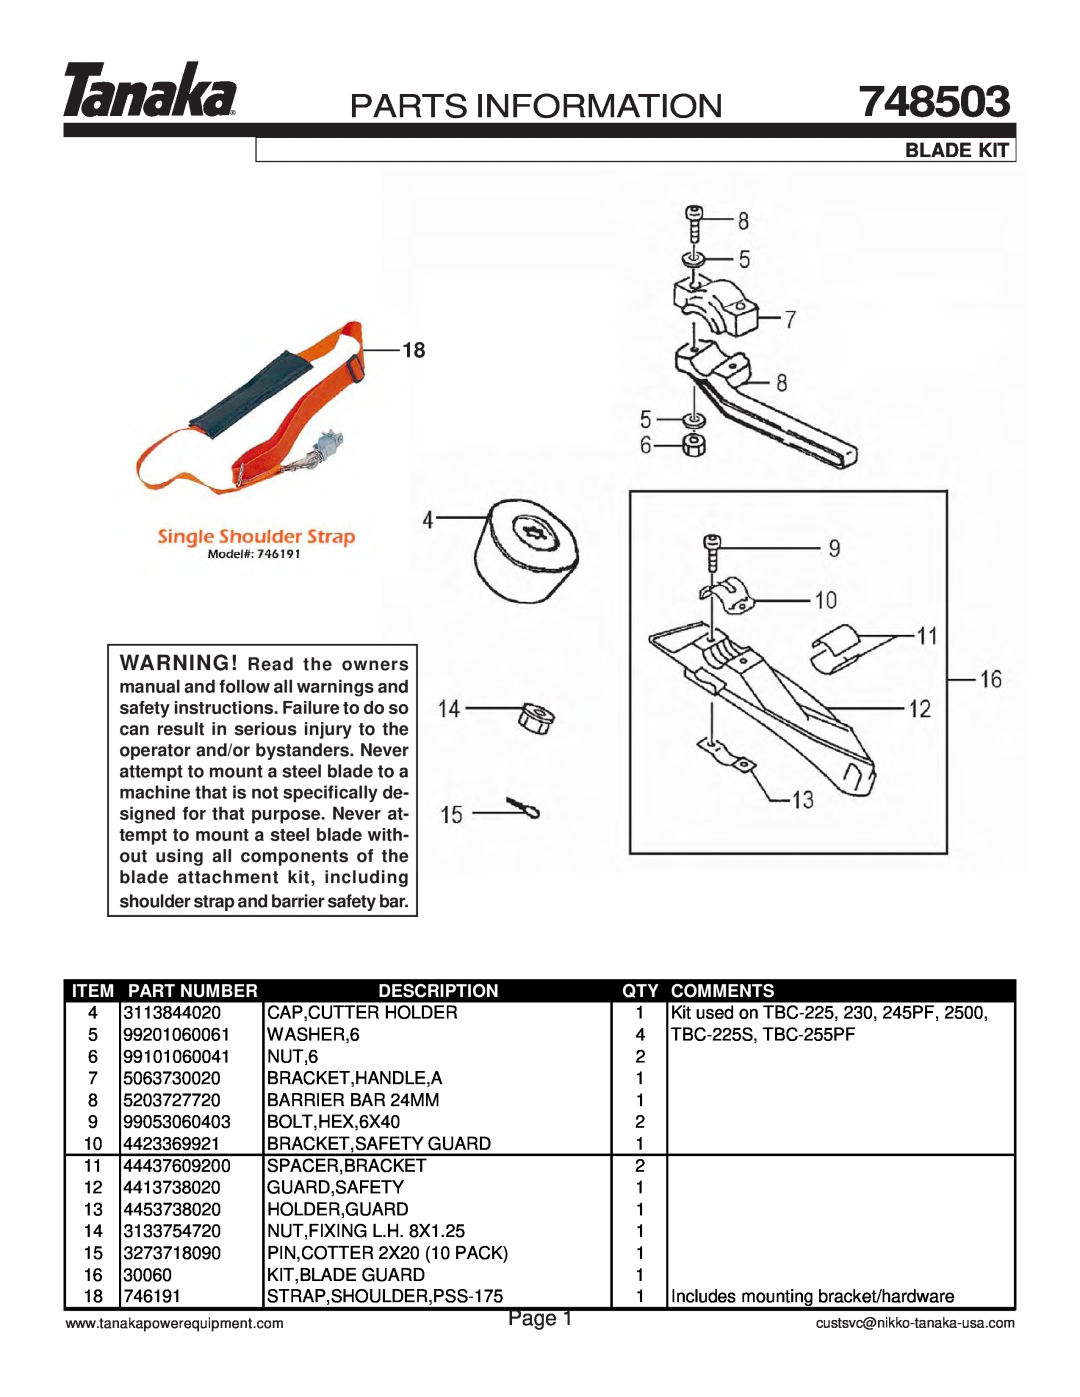 Tanaka TBC-225 748503, Parts Information, Page, Blade Kit, shoulder strap and barrier safety bar, Part Number, Description 